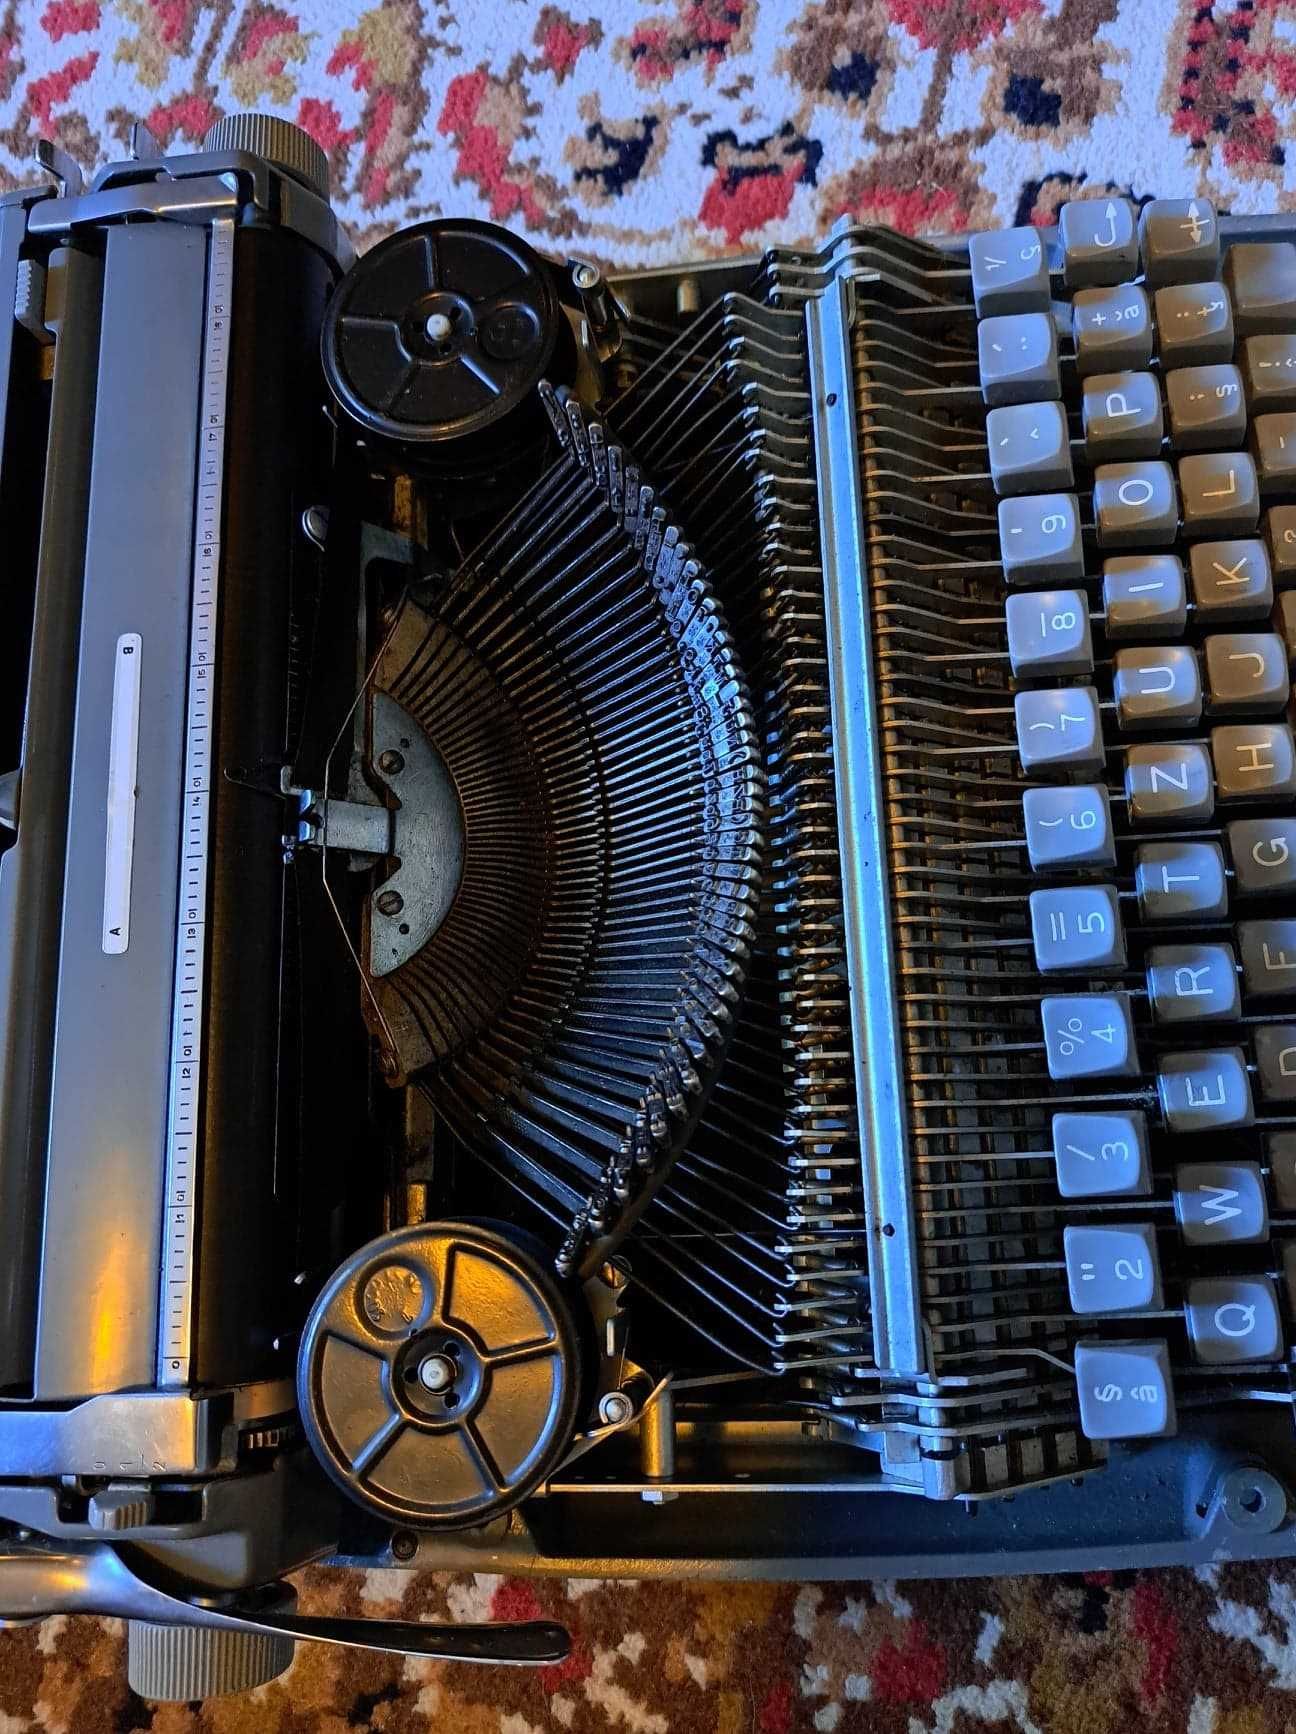 Masina de scris Consul cu serviata rigida din piele